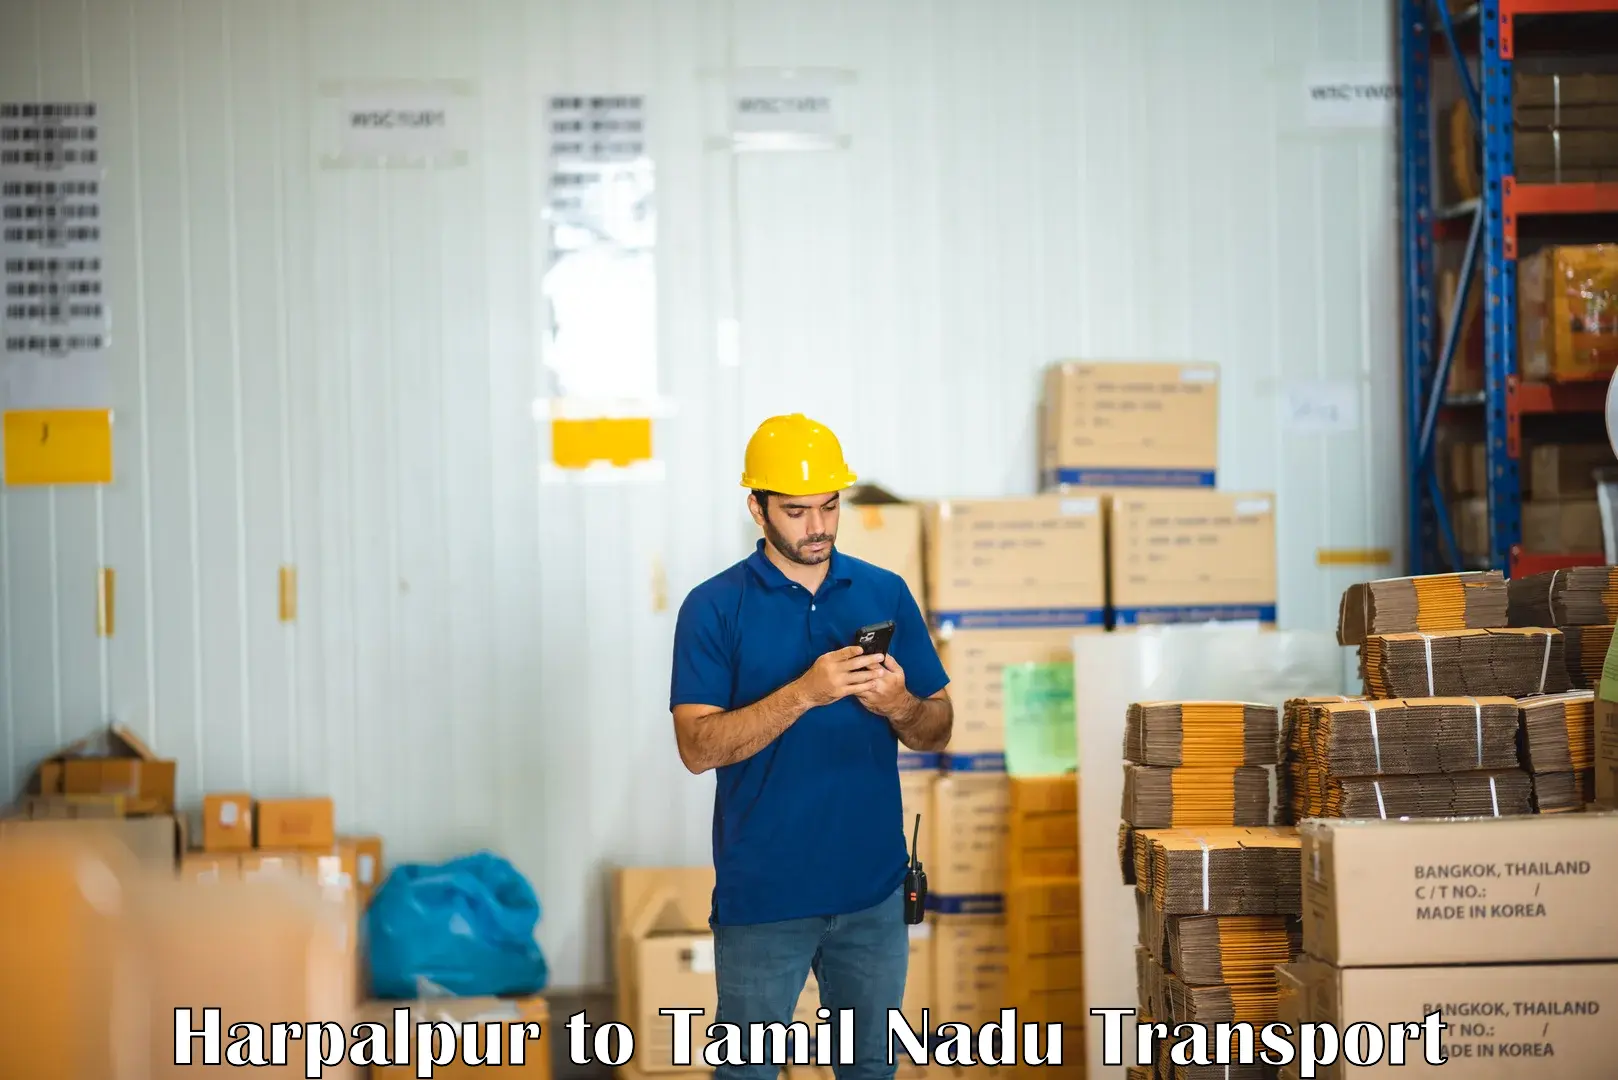 Daily transport service Harpalpur to Tamil Nadu